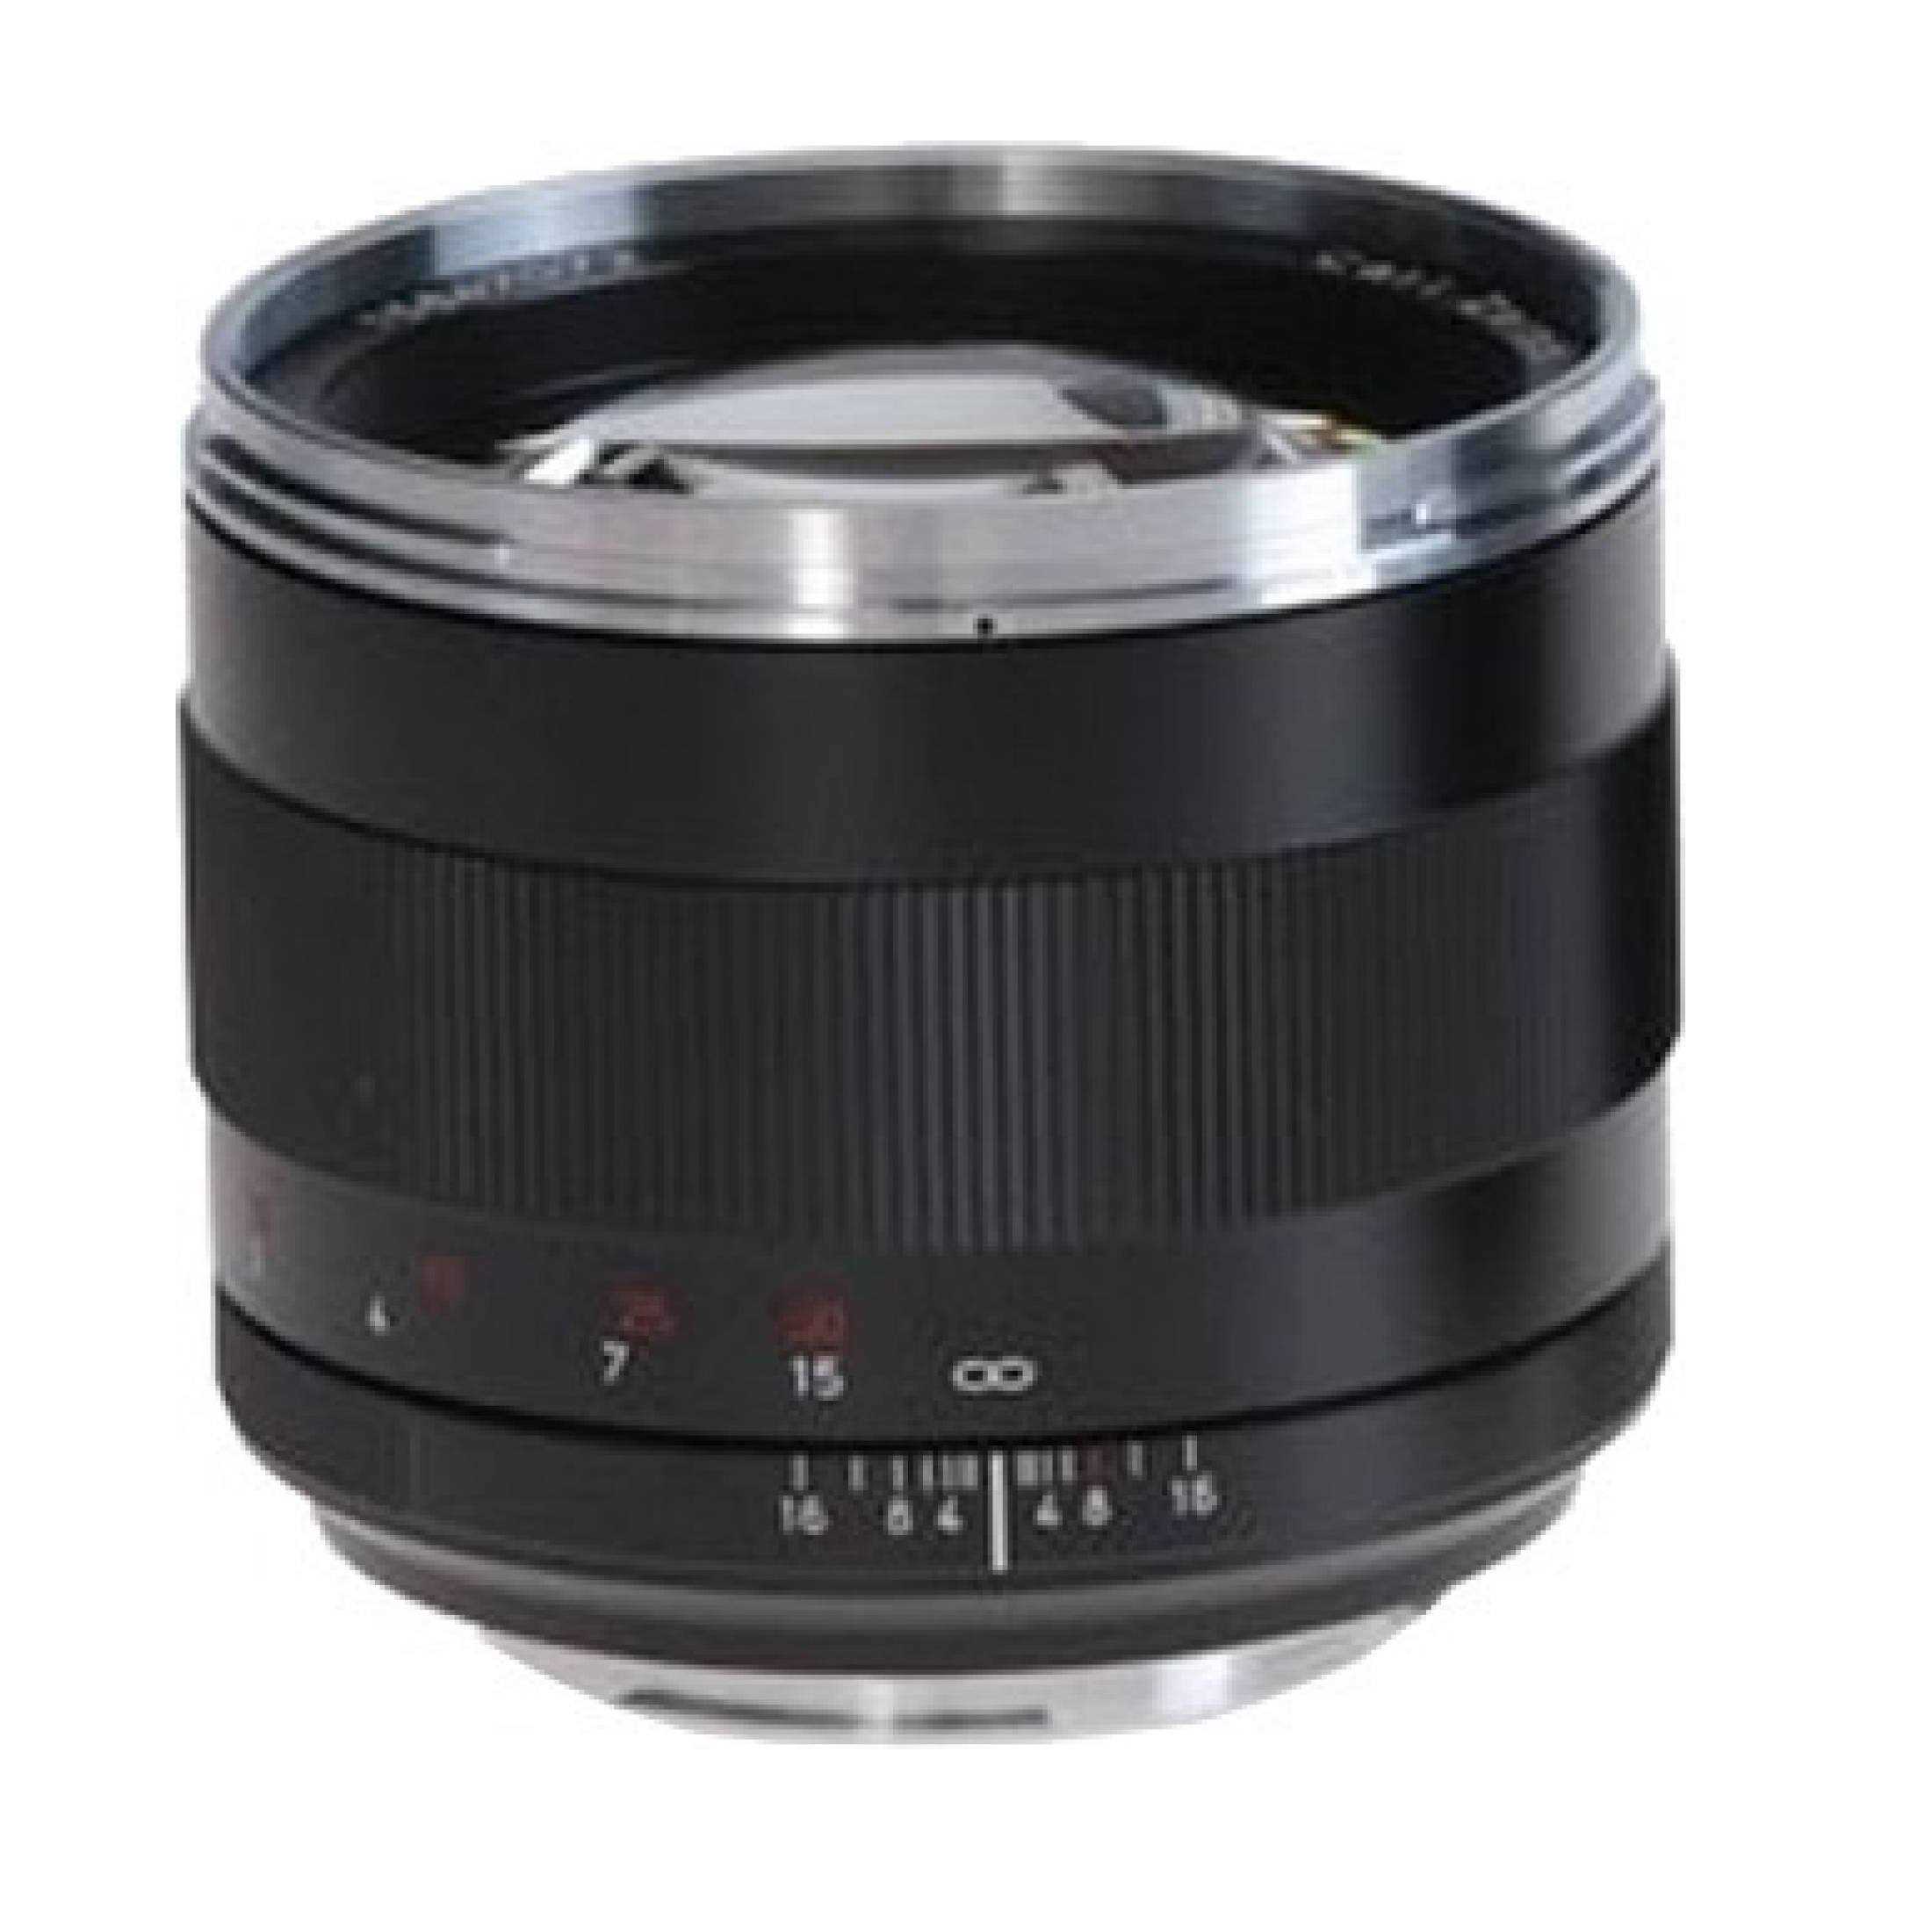 Zeiss Planar T 1.4/85 ZE (For Canon) Lens Price {4 Jun